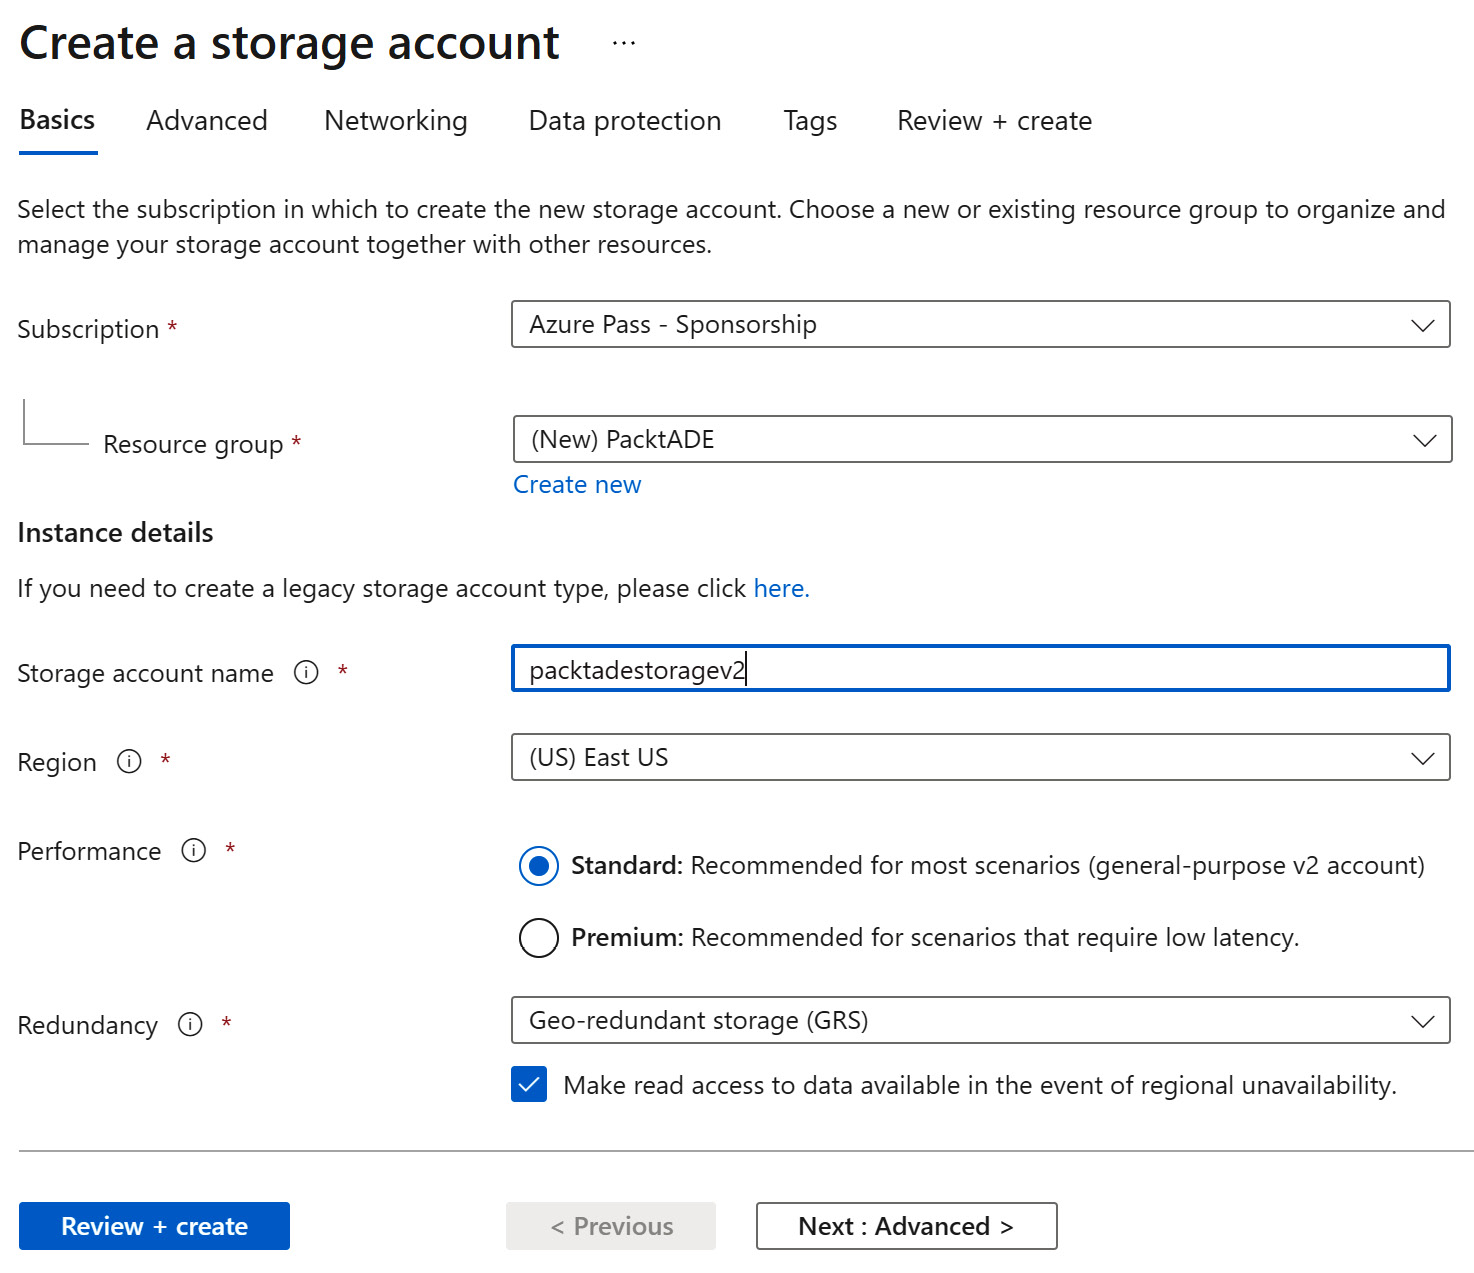 Figure 1.1 – The Create a storage account Basics tab
